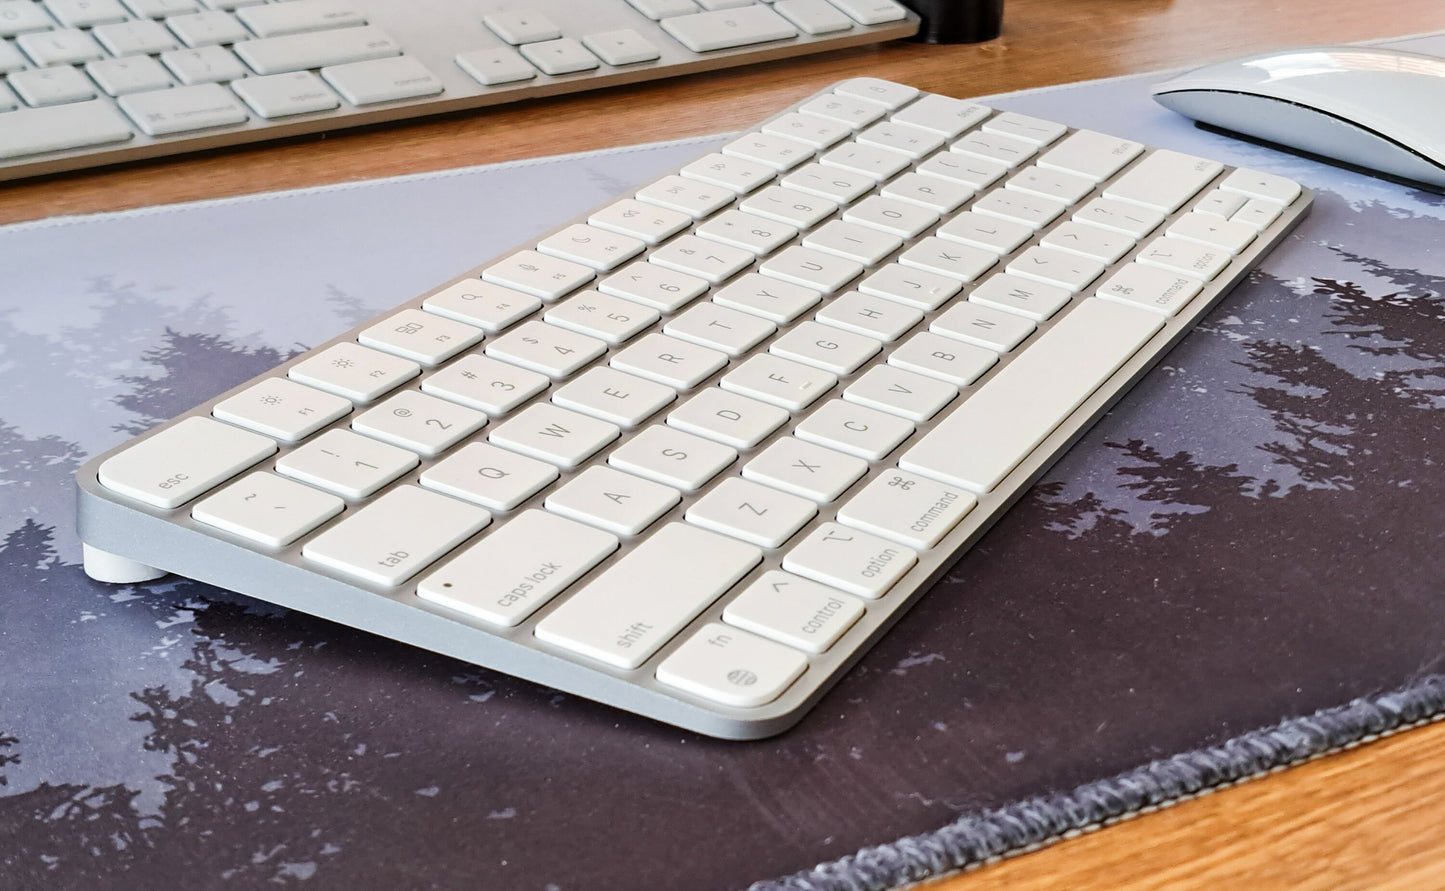 Universal Keyboard Riser Feet for Apple Magic Keyboard